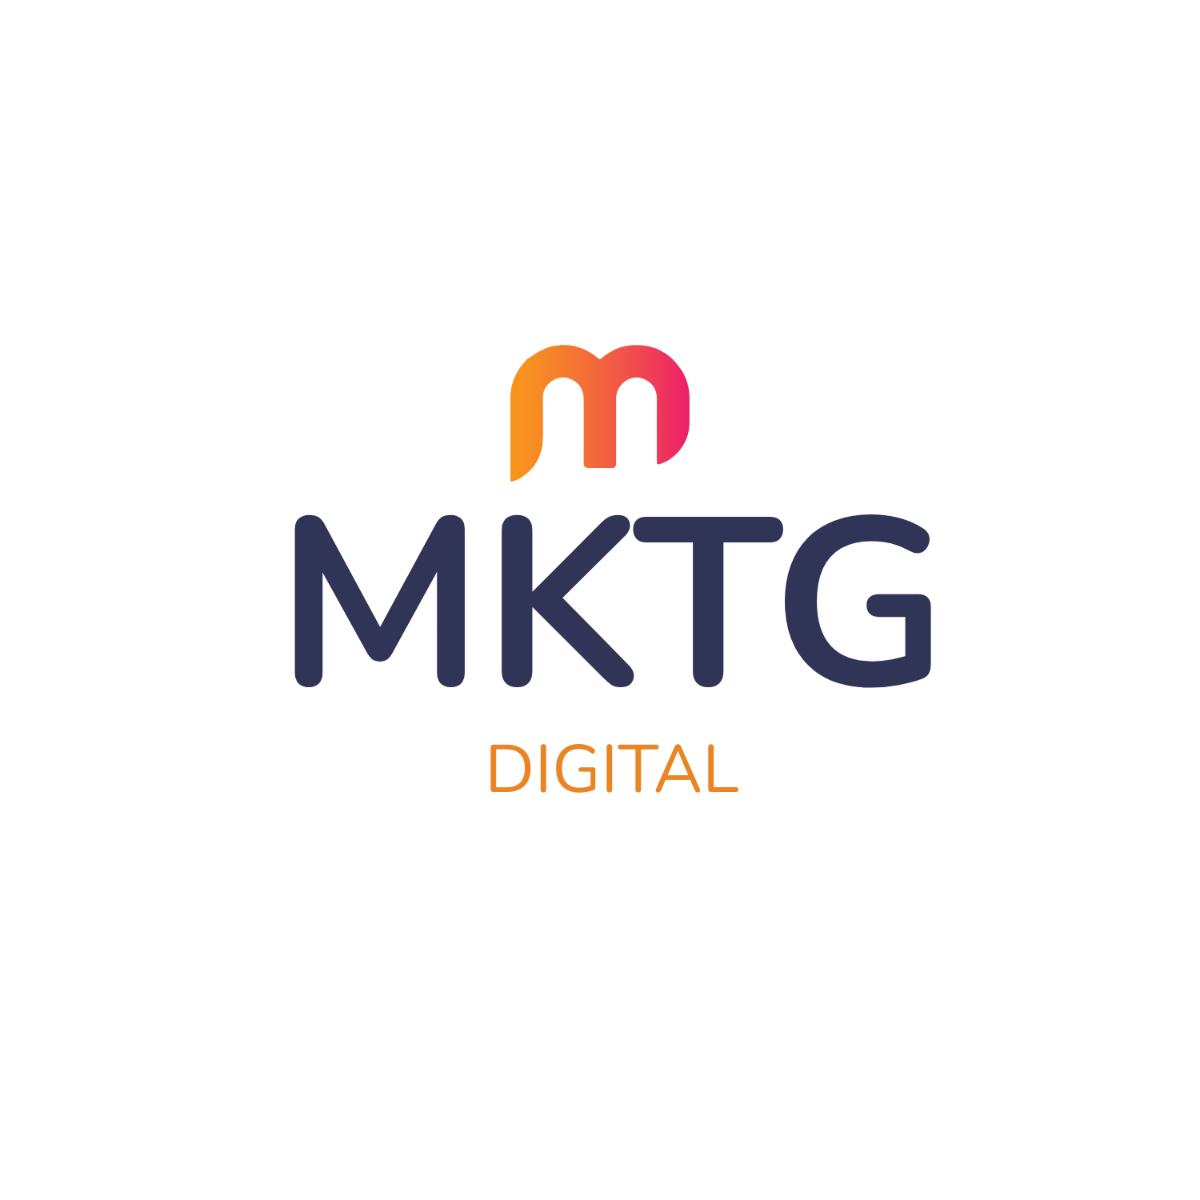 Digital Marketing Agency Pitch Deck Logo Template